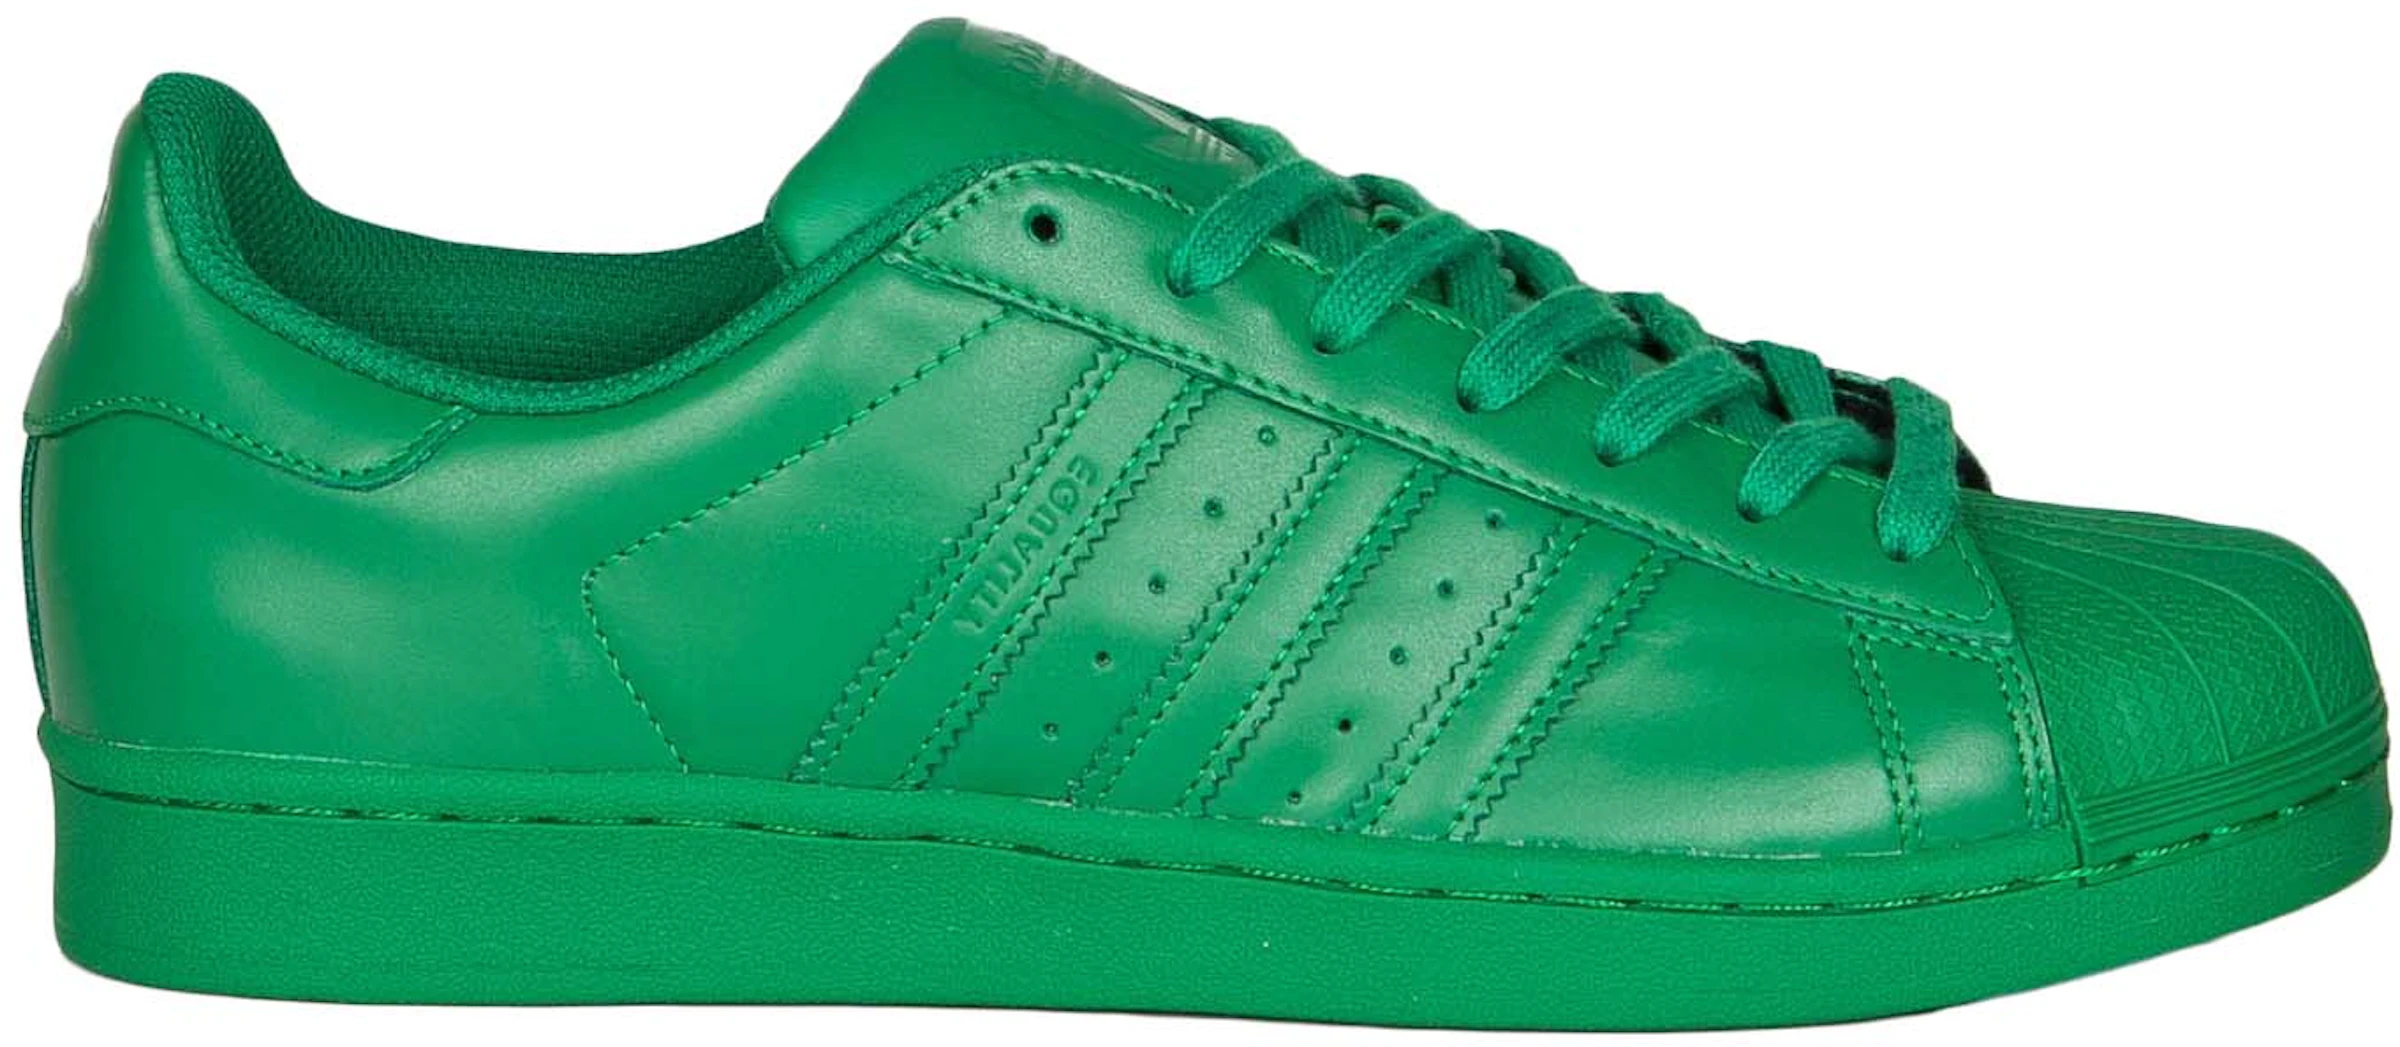 adidas Superstar Supercolor Pack Green - - US